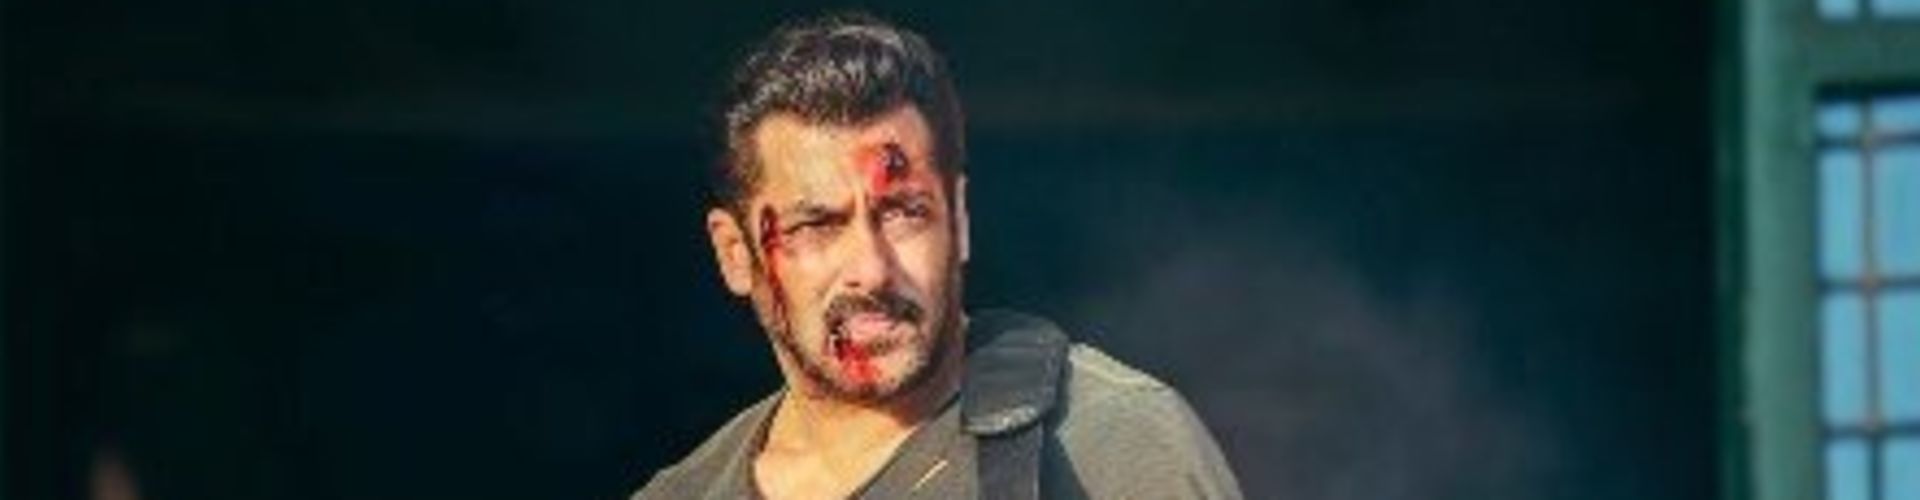 Salman Khan - Gun Blazing Indian Spy!